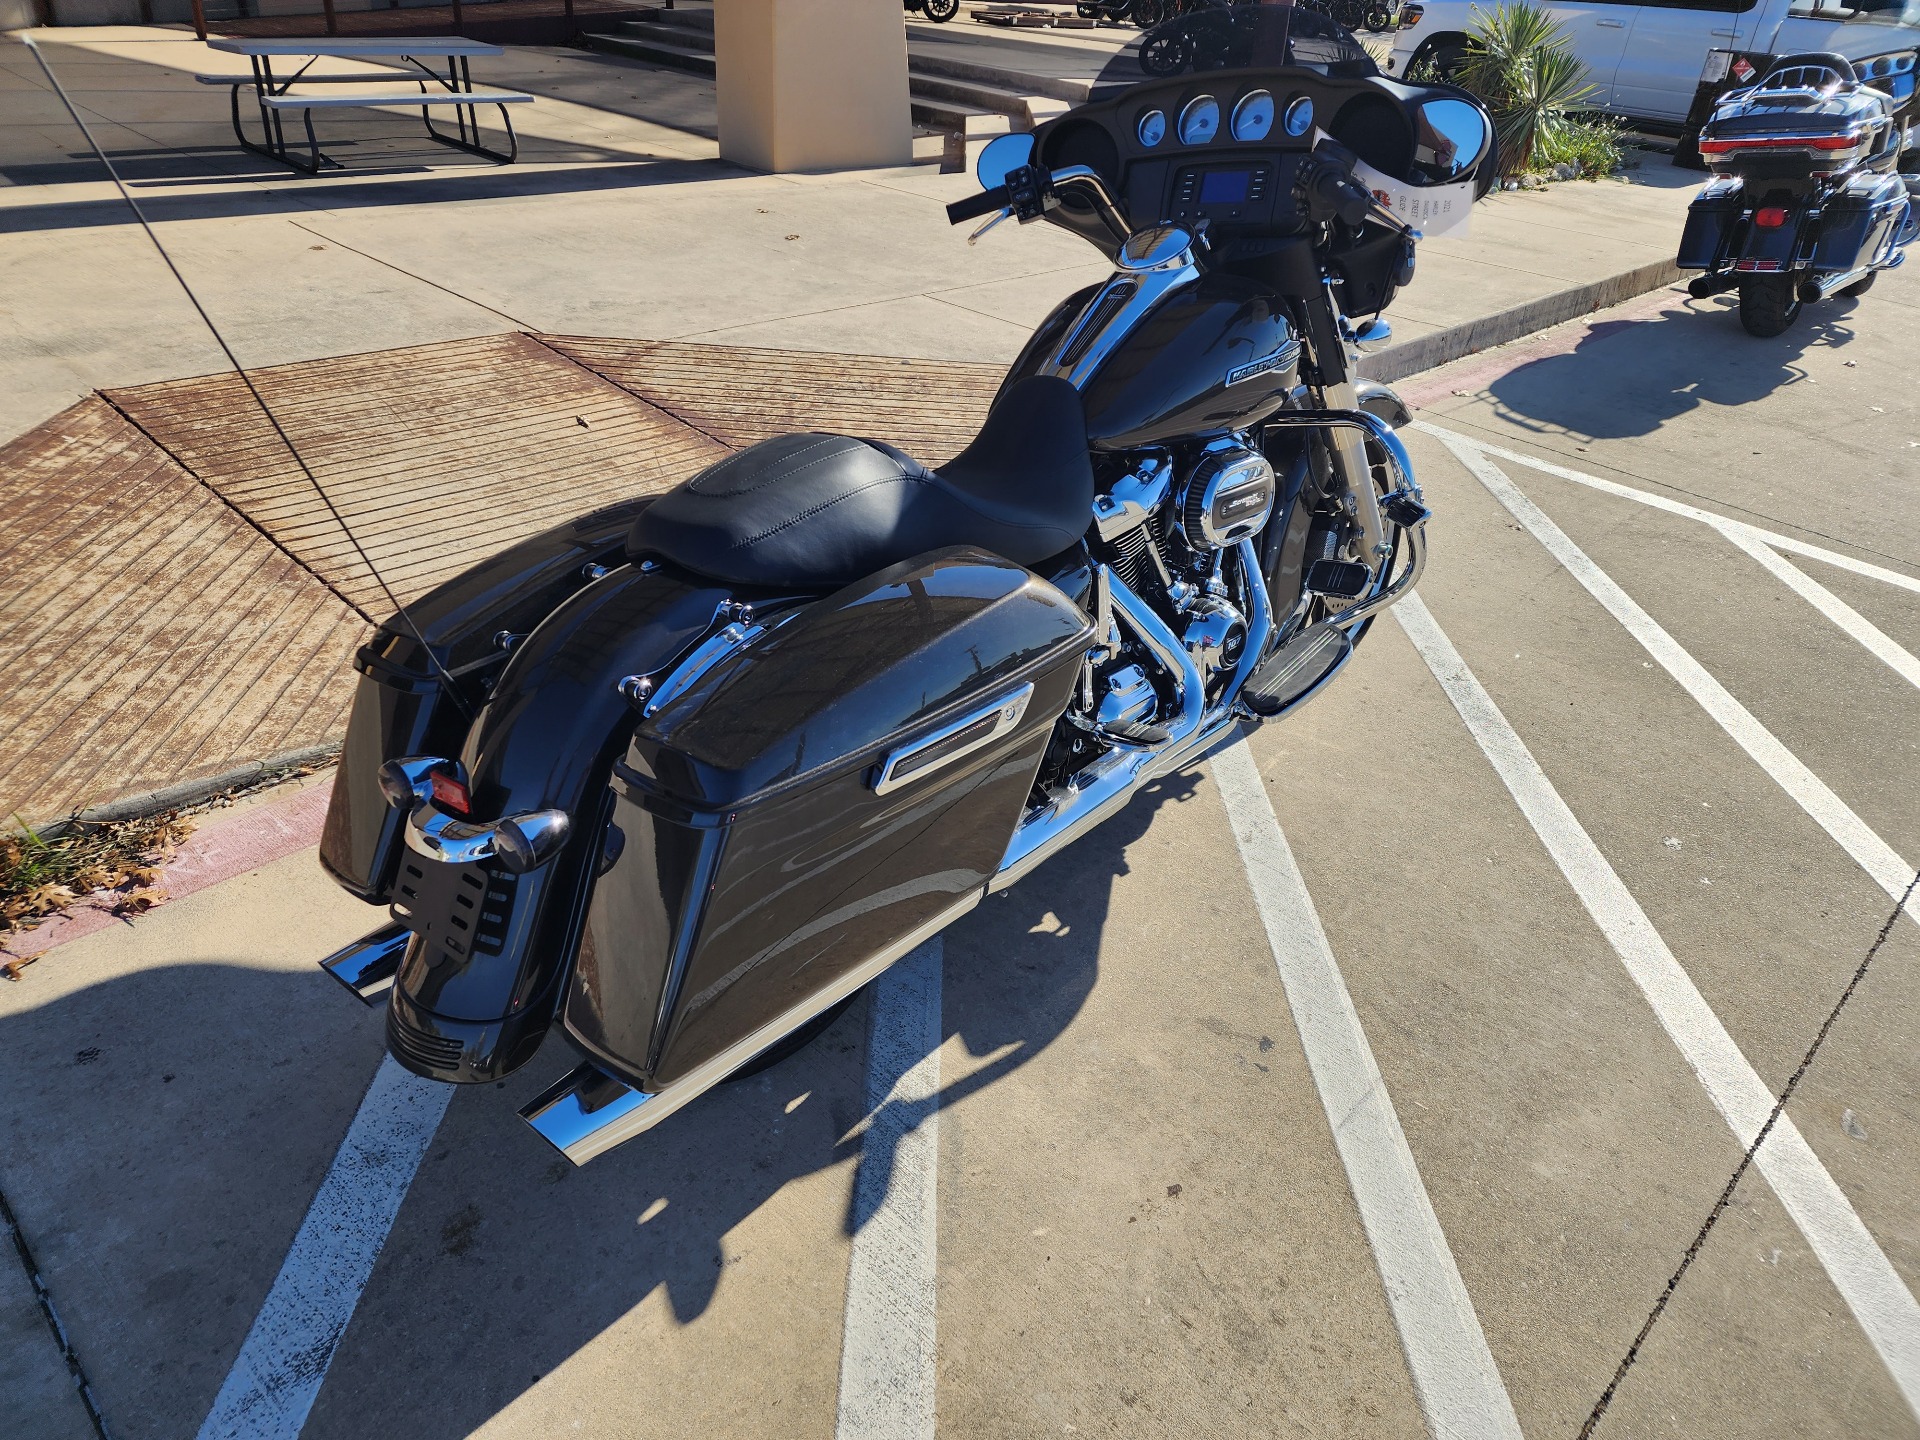 2021 Harley-Davidson Street Glide® in San Antonio, Texas - Photo 8